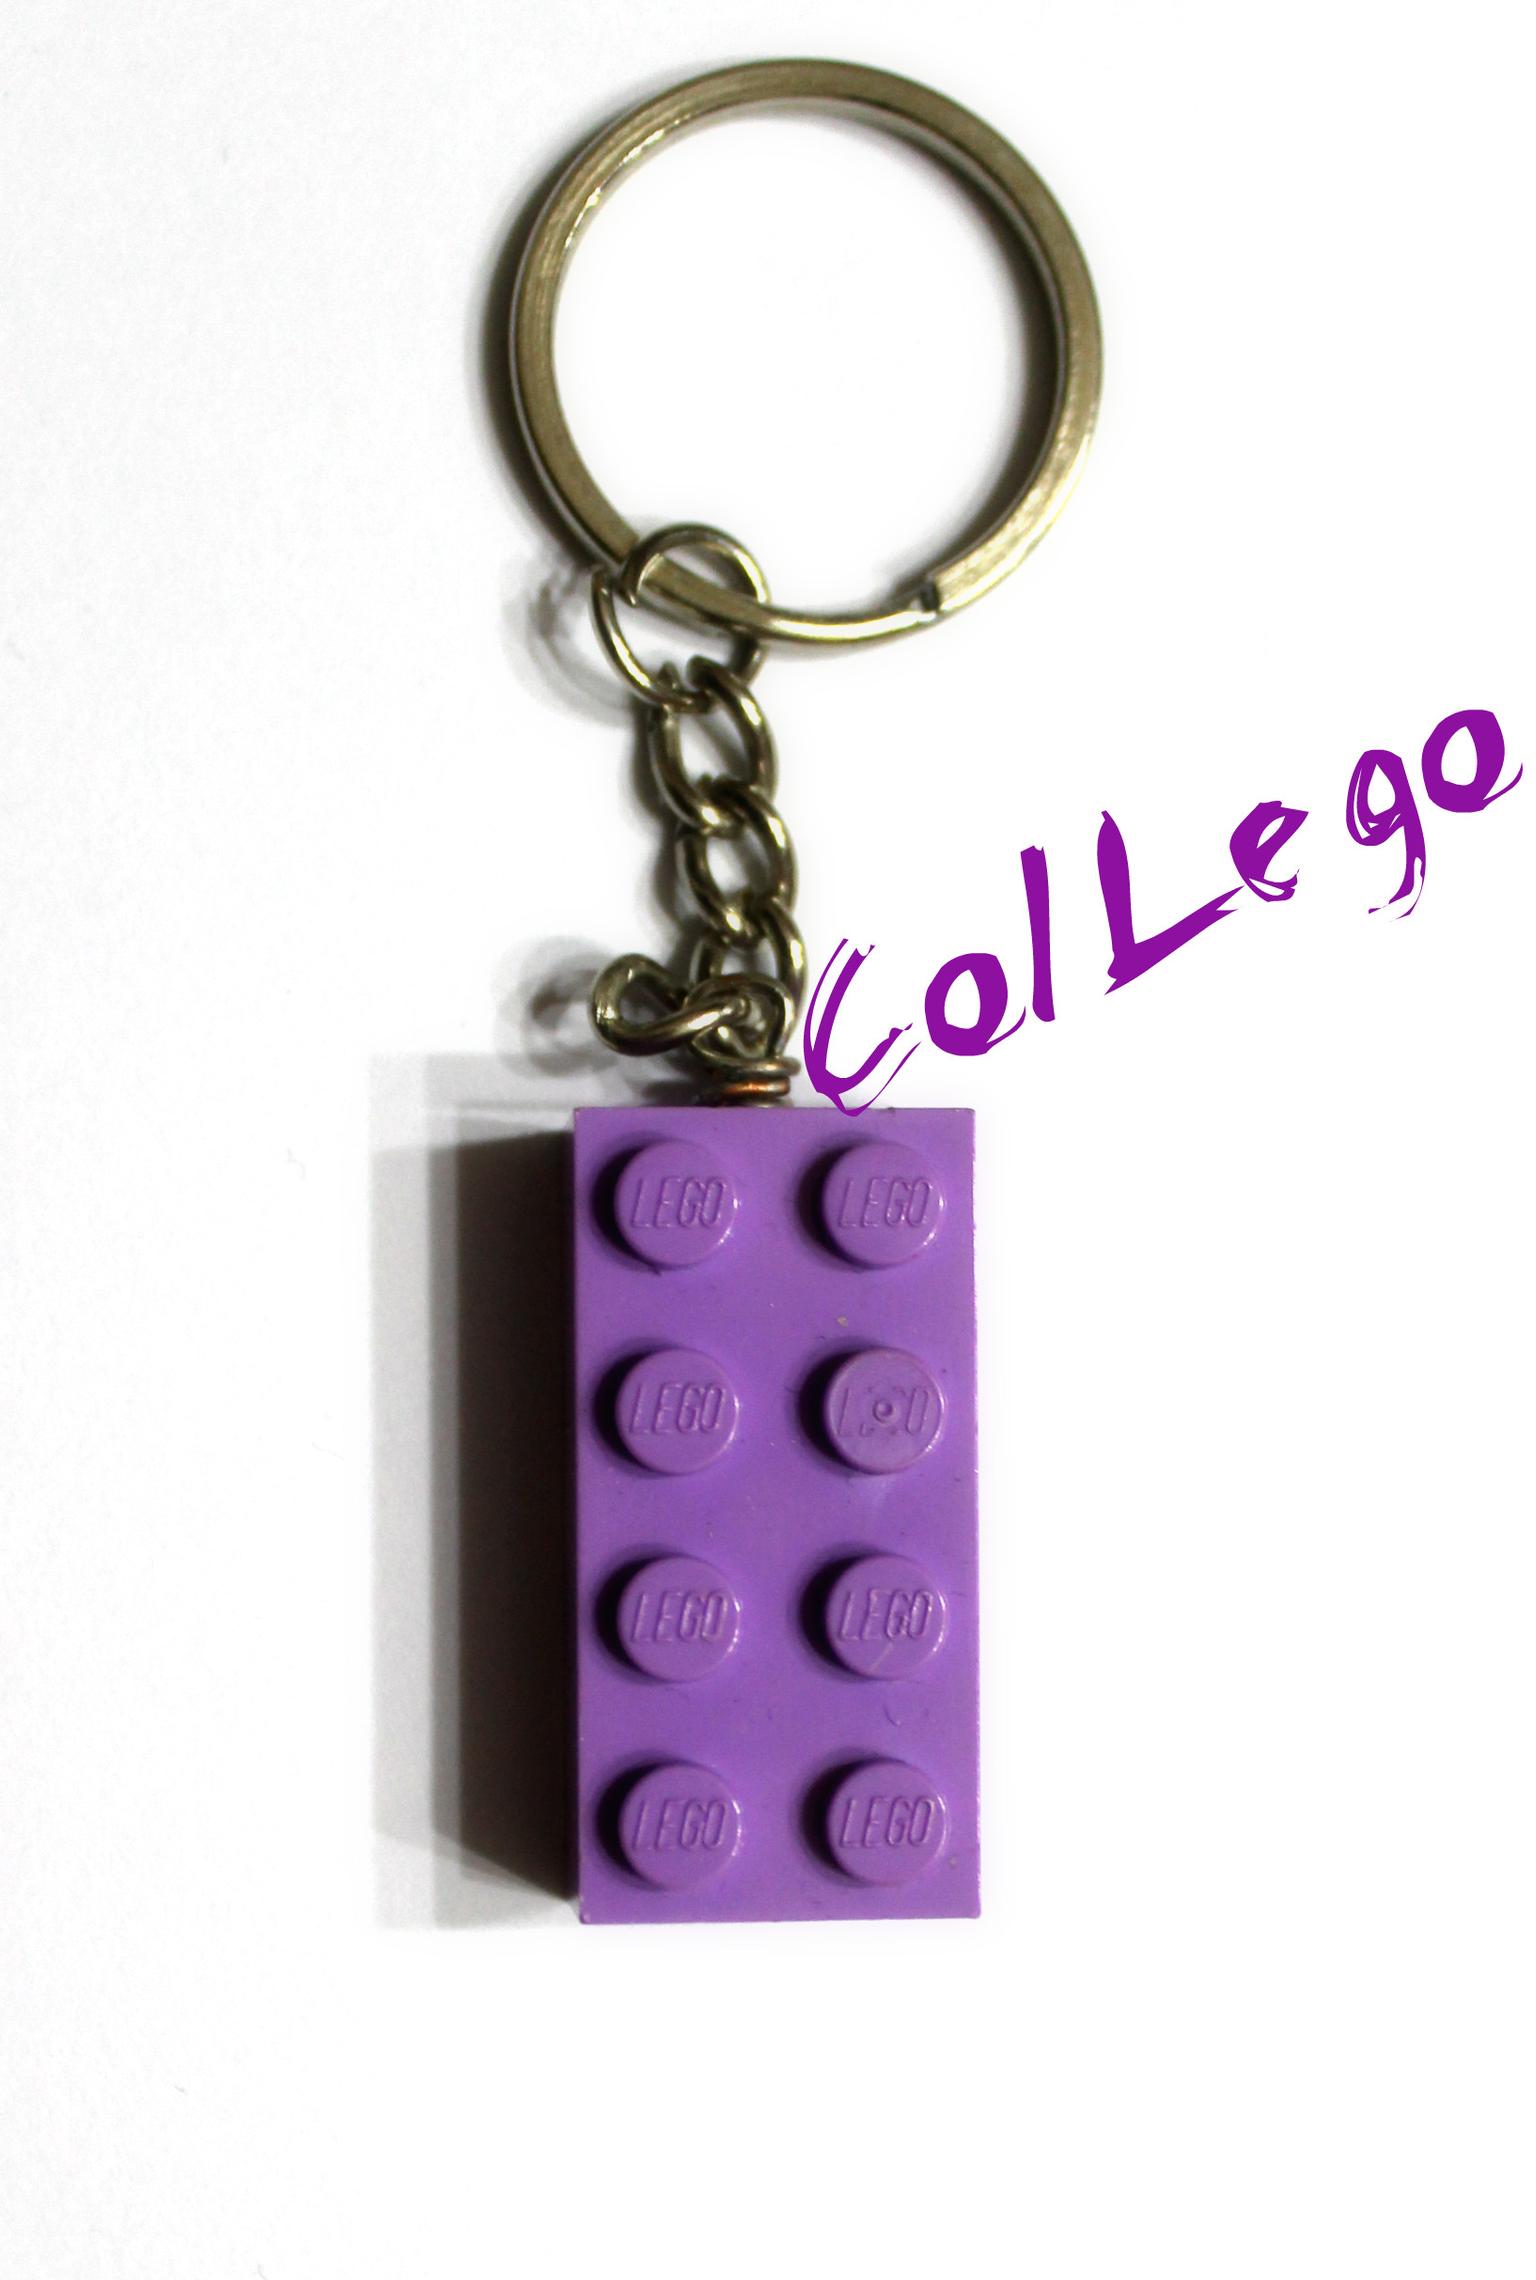 Portachiavi Lego Idea Bomboniere In Setteville For 3 00 For Sale Shpock